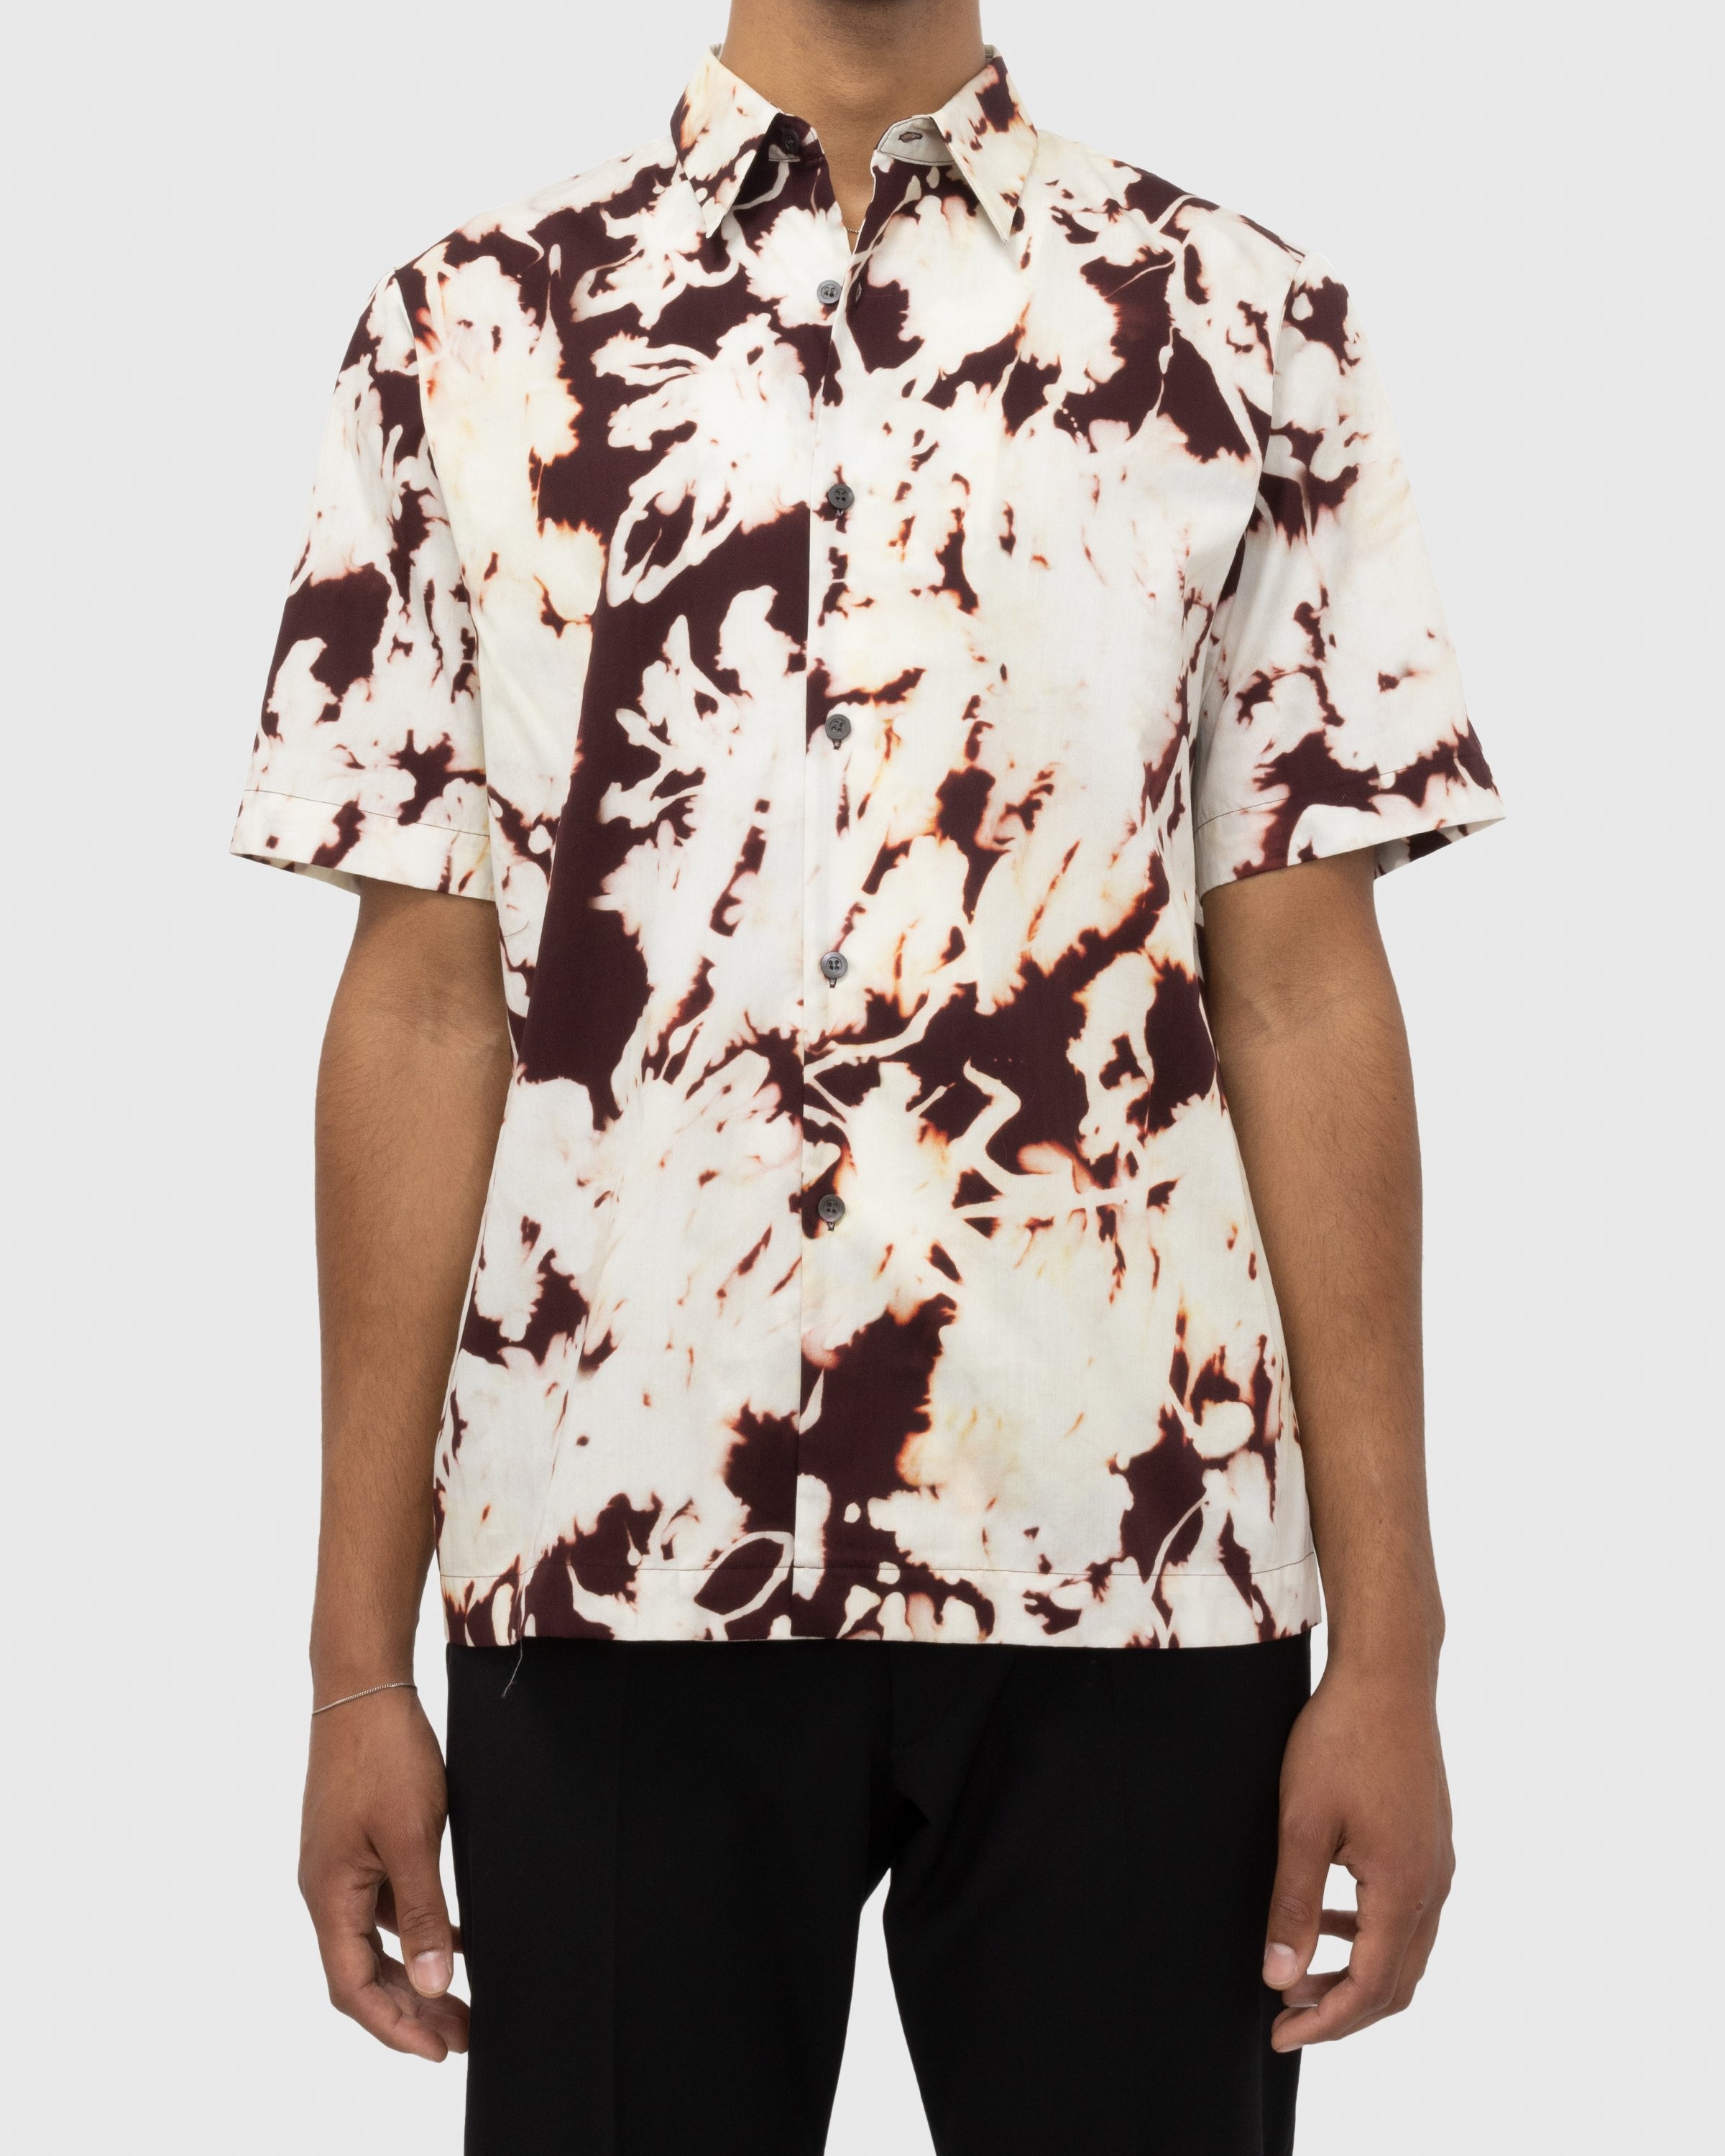 Dries van Noten – Clasen Shirt Multi - Shirts - Multi - Image 4